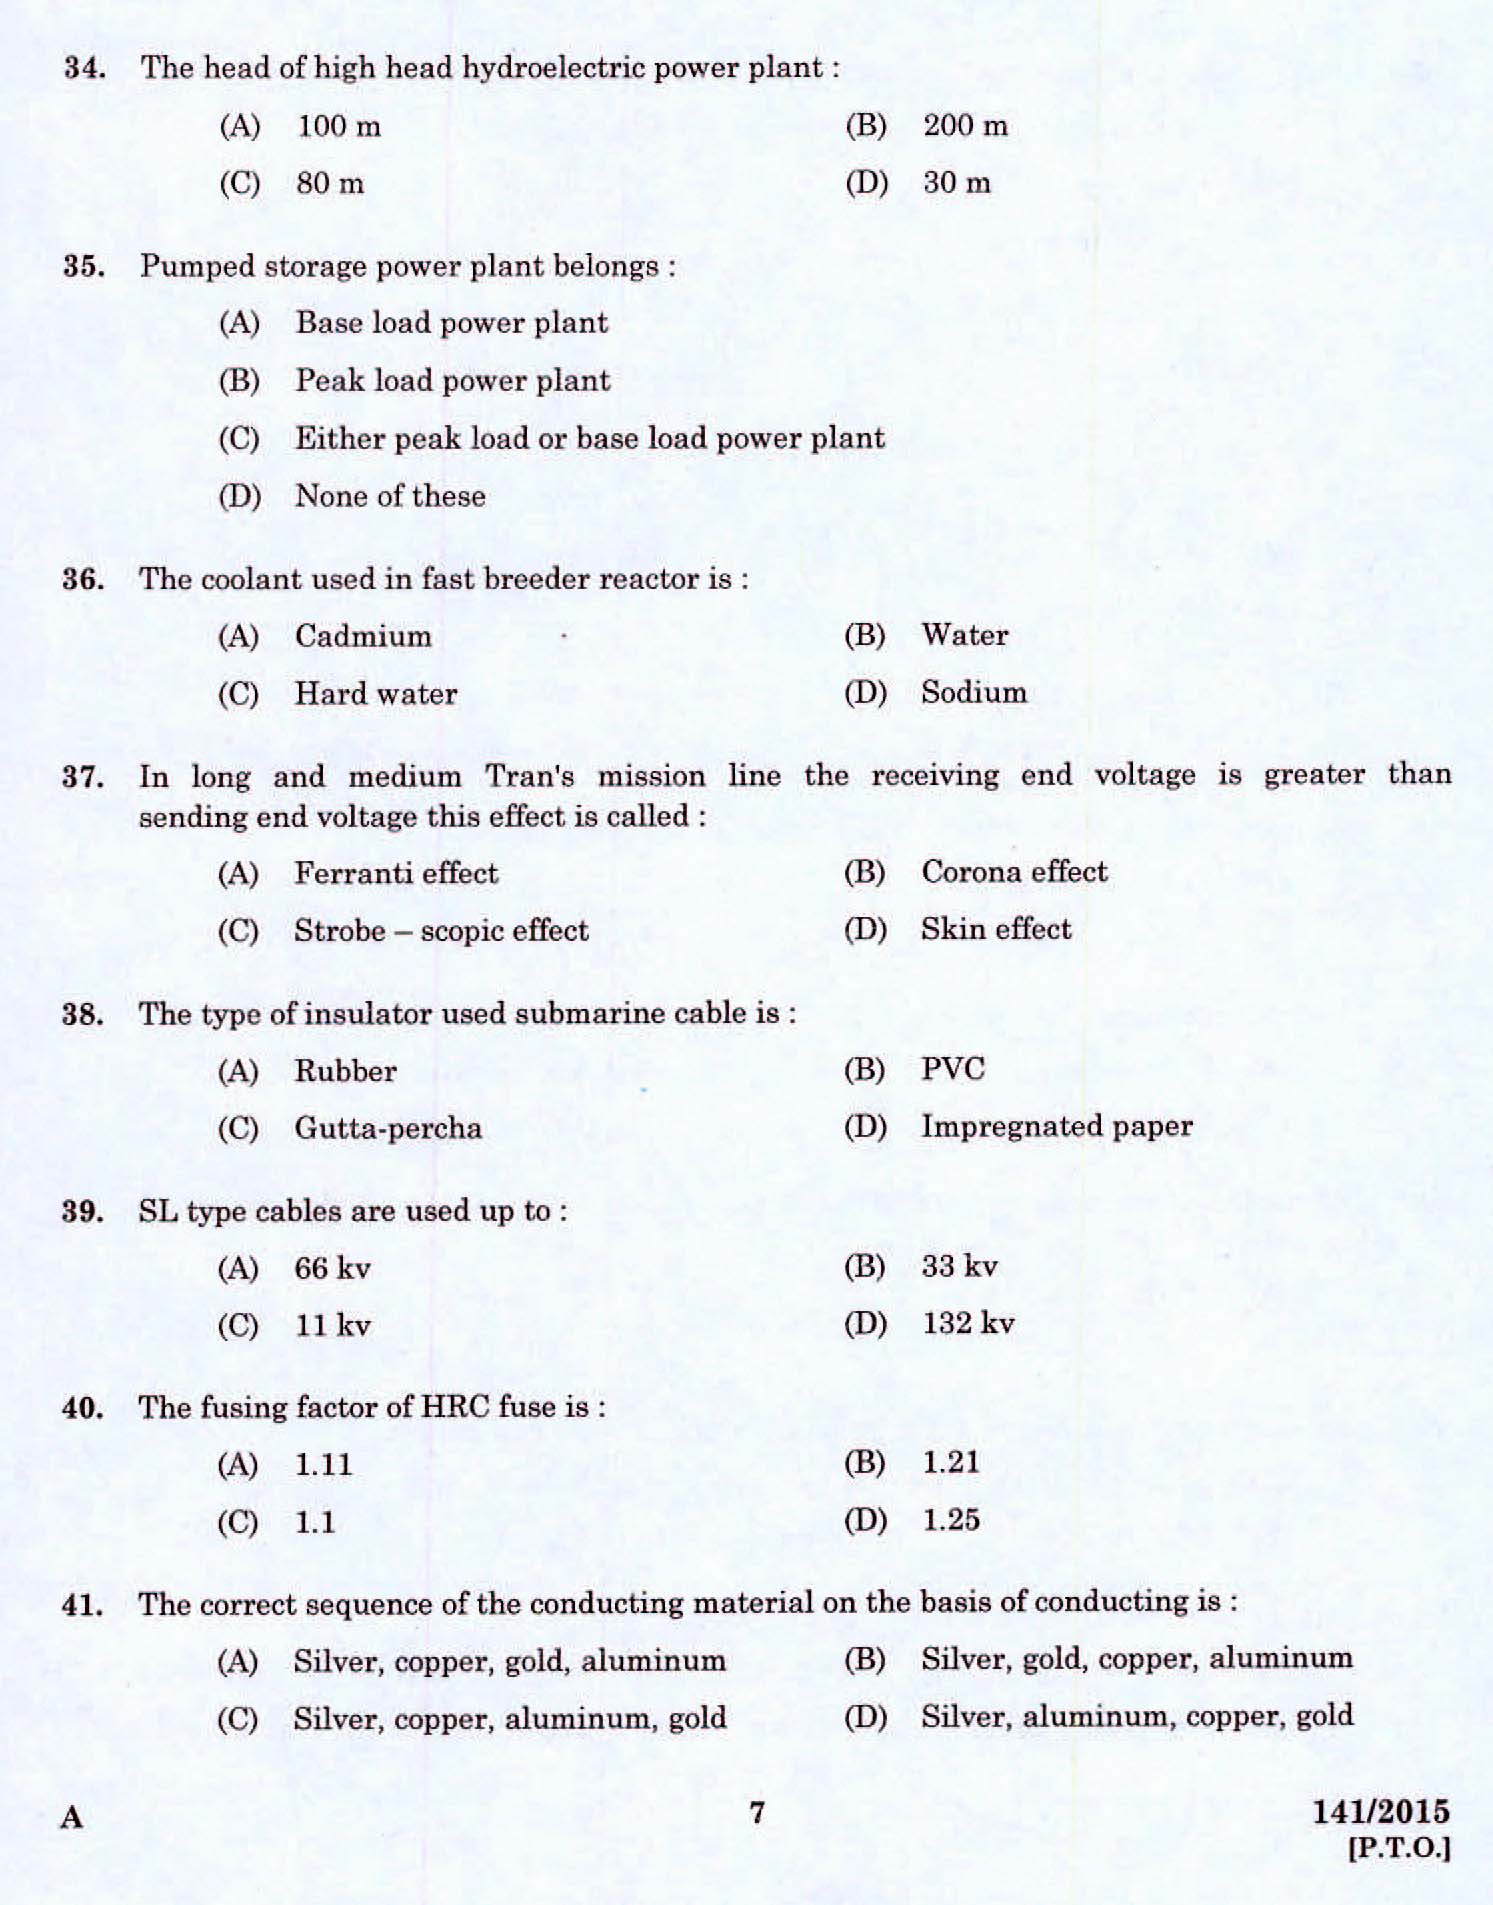 Kerala PSC Electrician Exam 2015 Question Paper Code 1412015 5